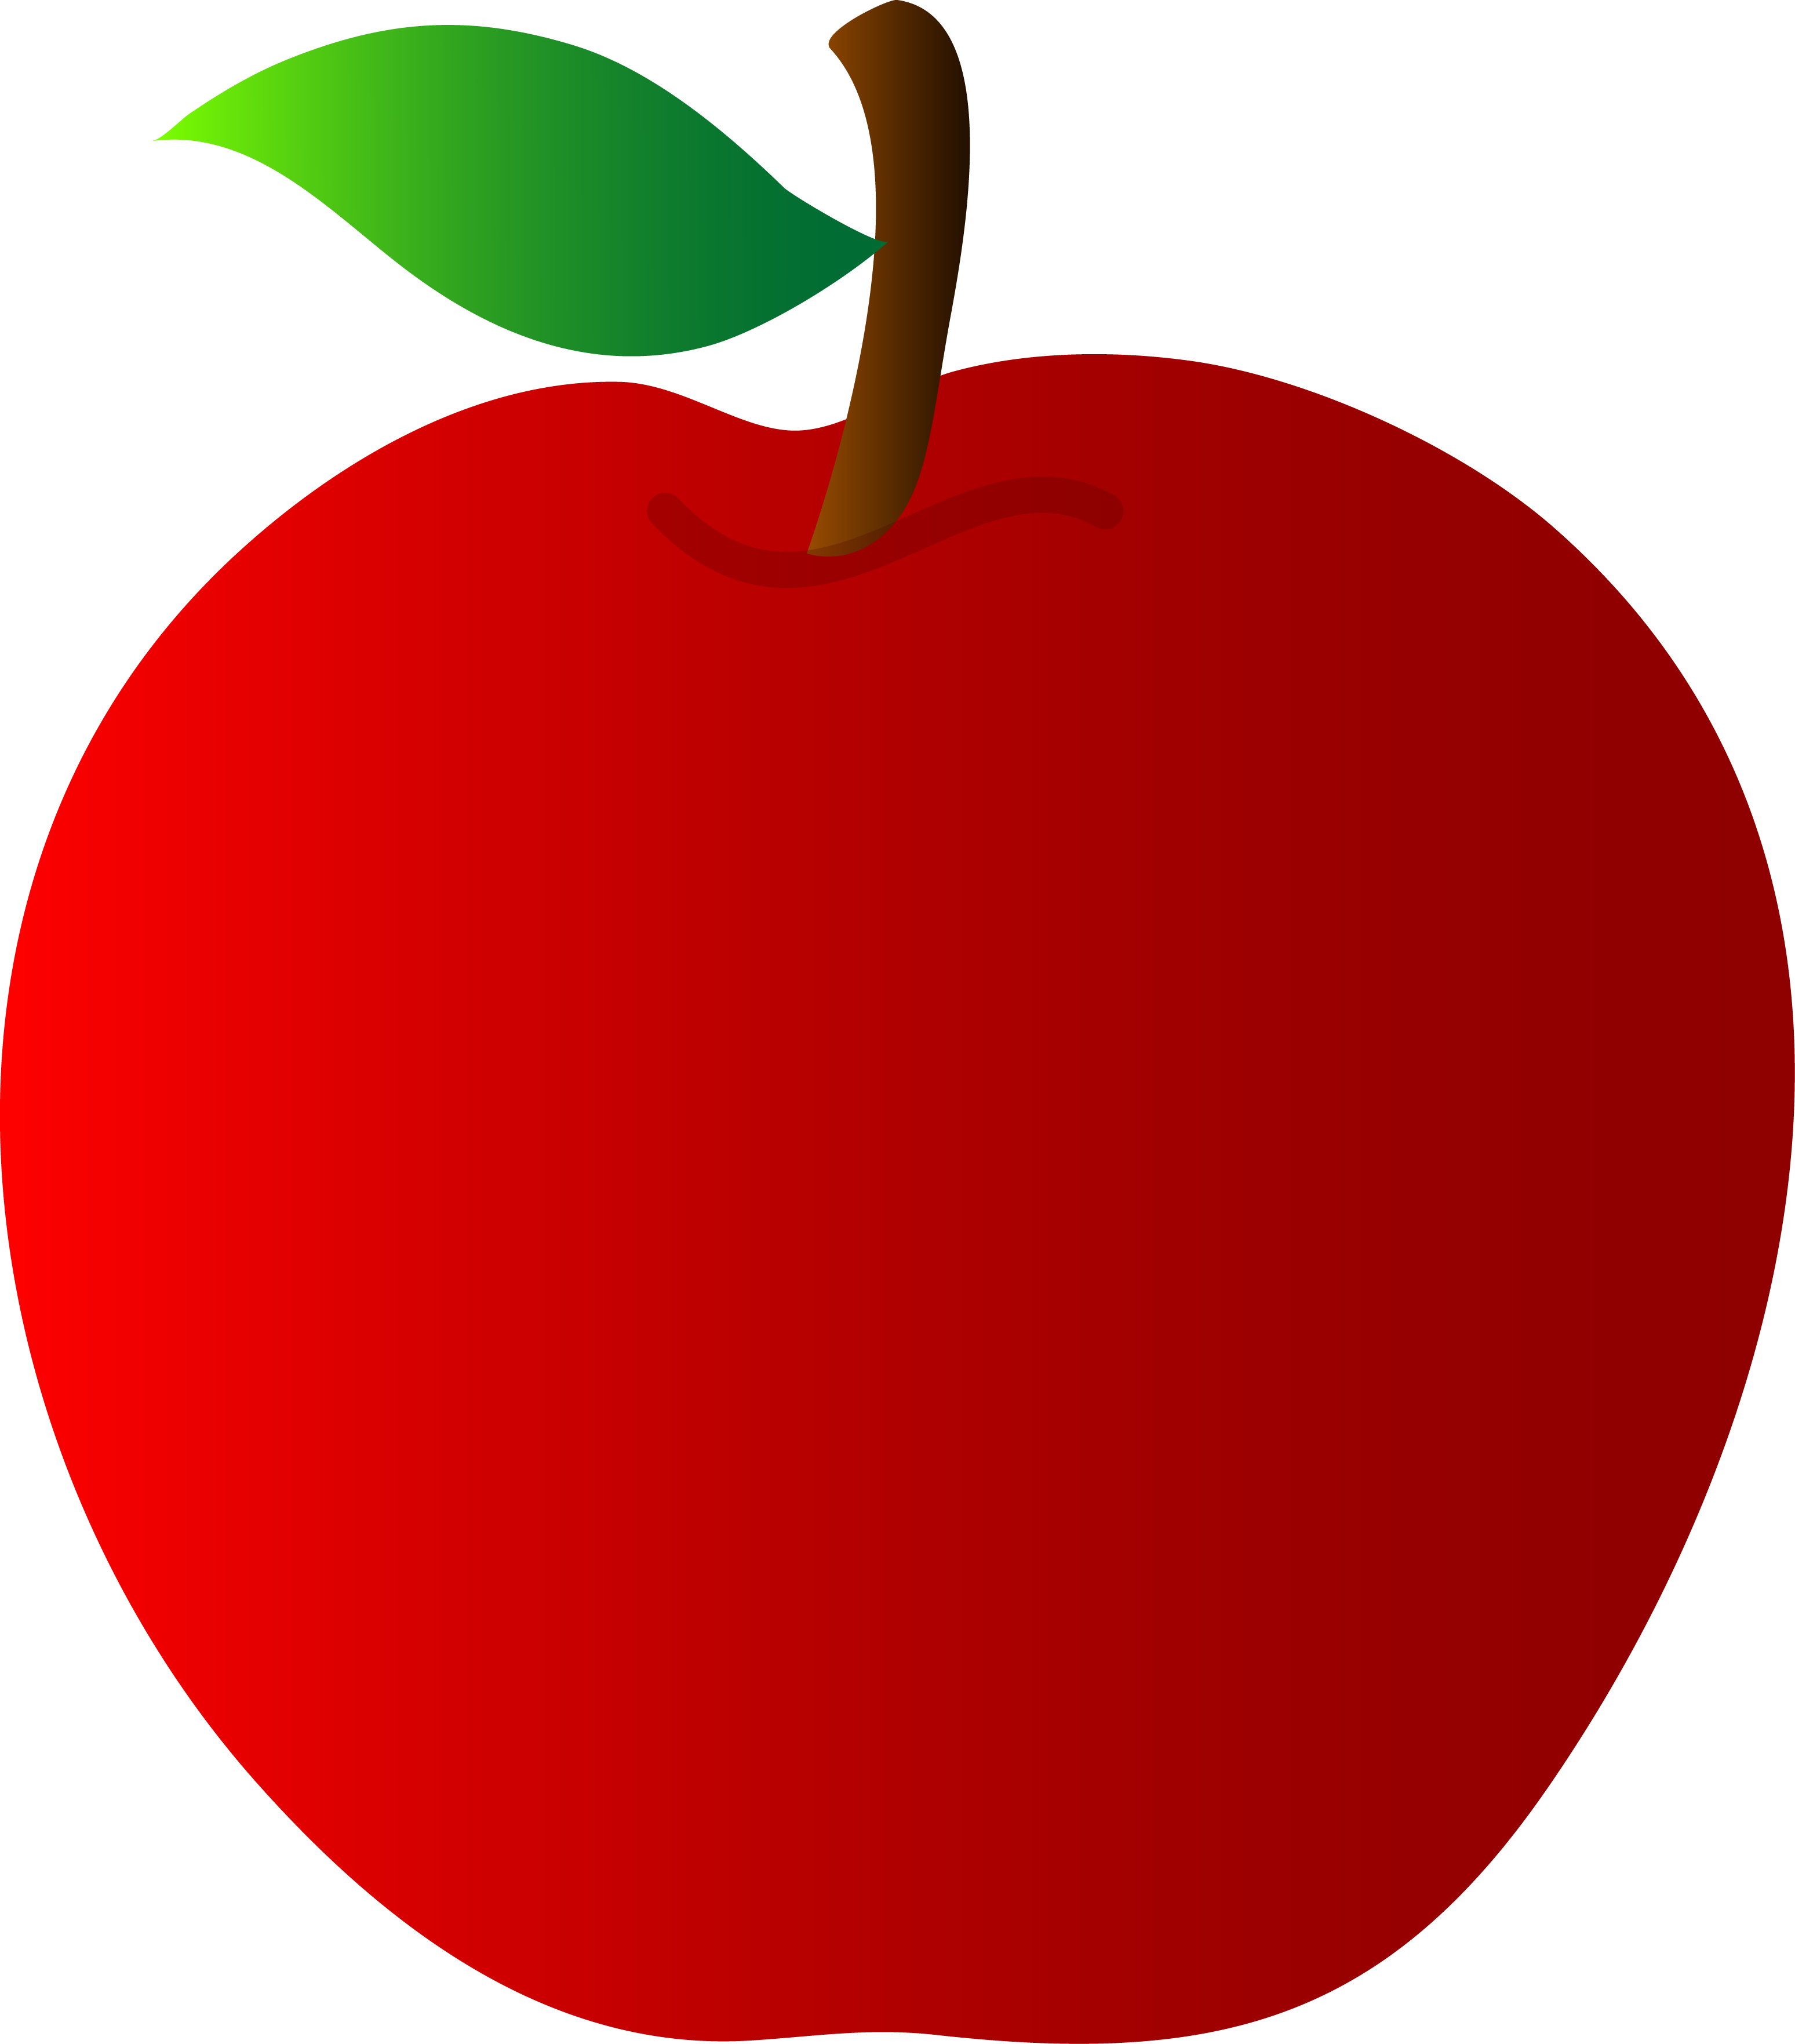 Apple Shape; Red apple